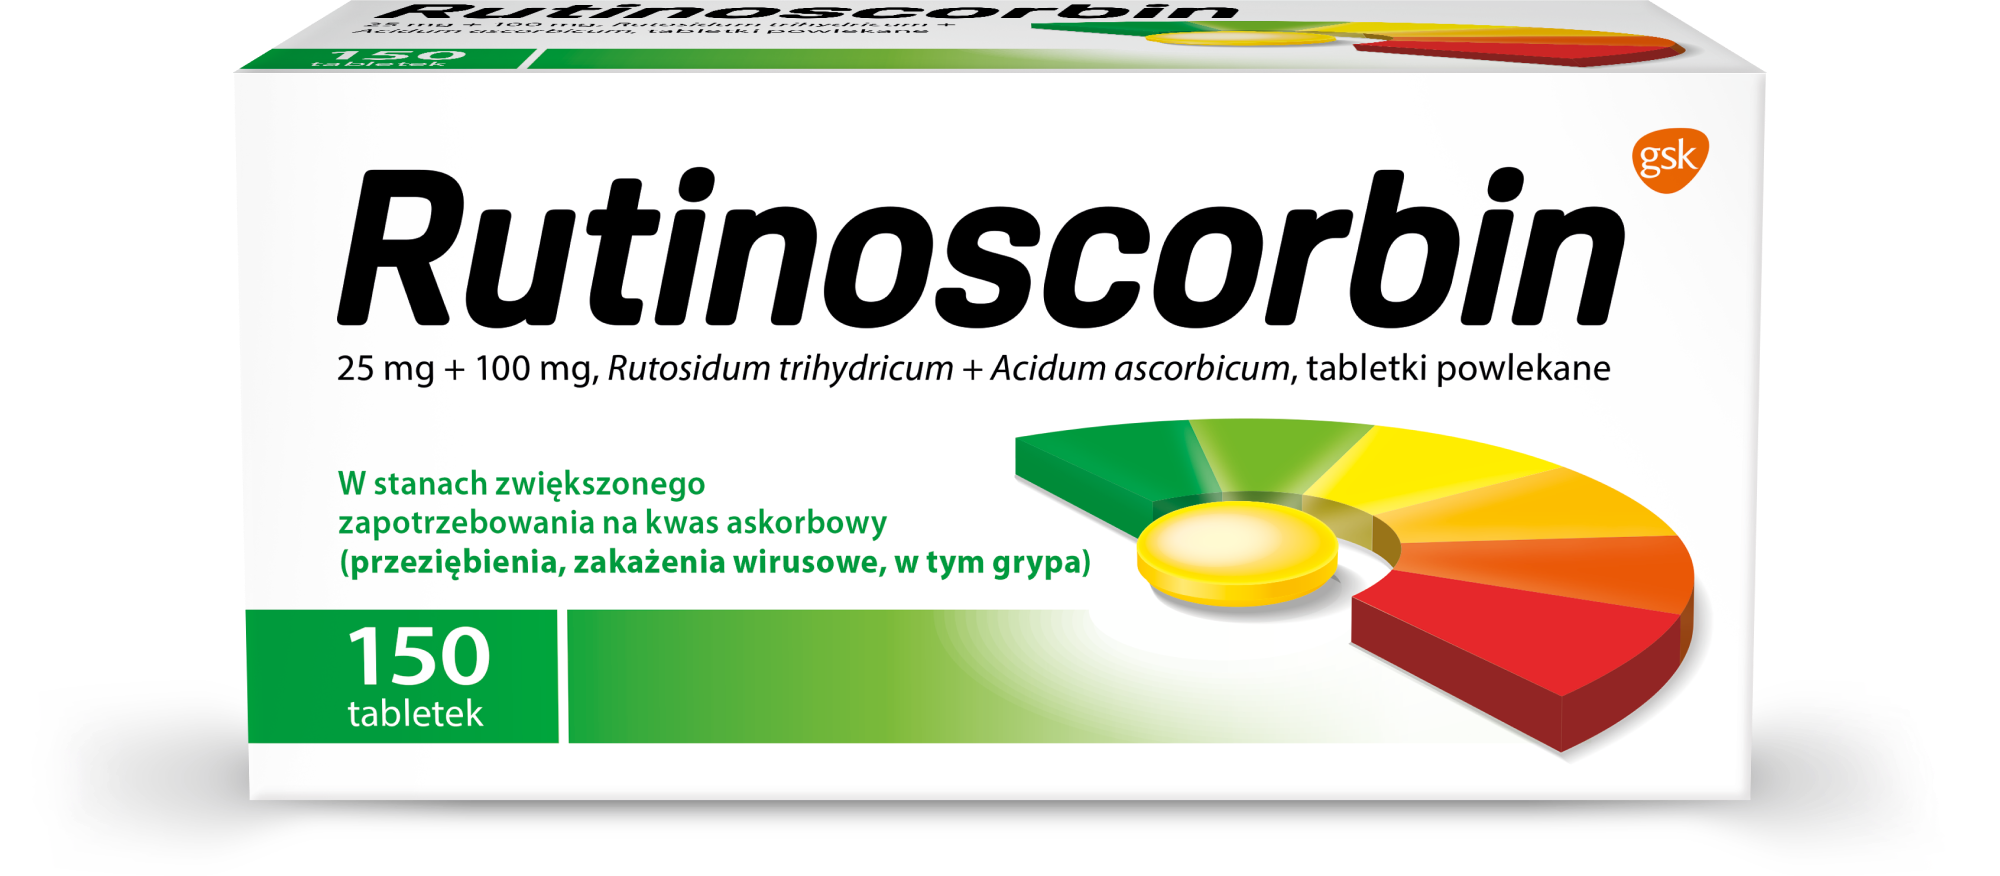 Rutinoscorbin 150 tabletek. Wybierz lek!